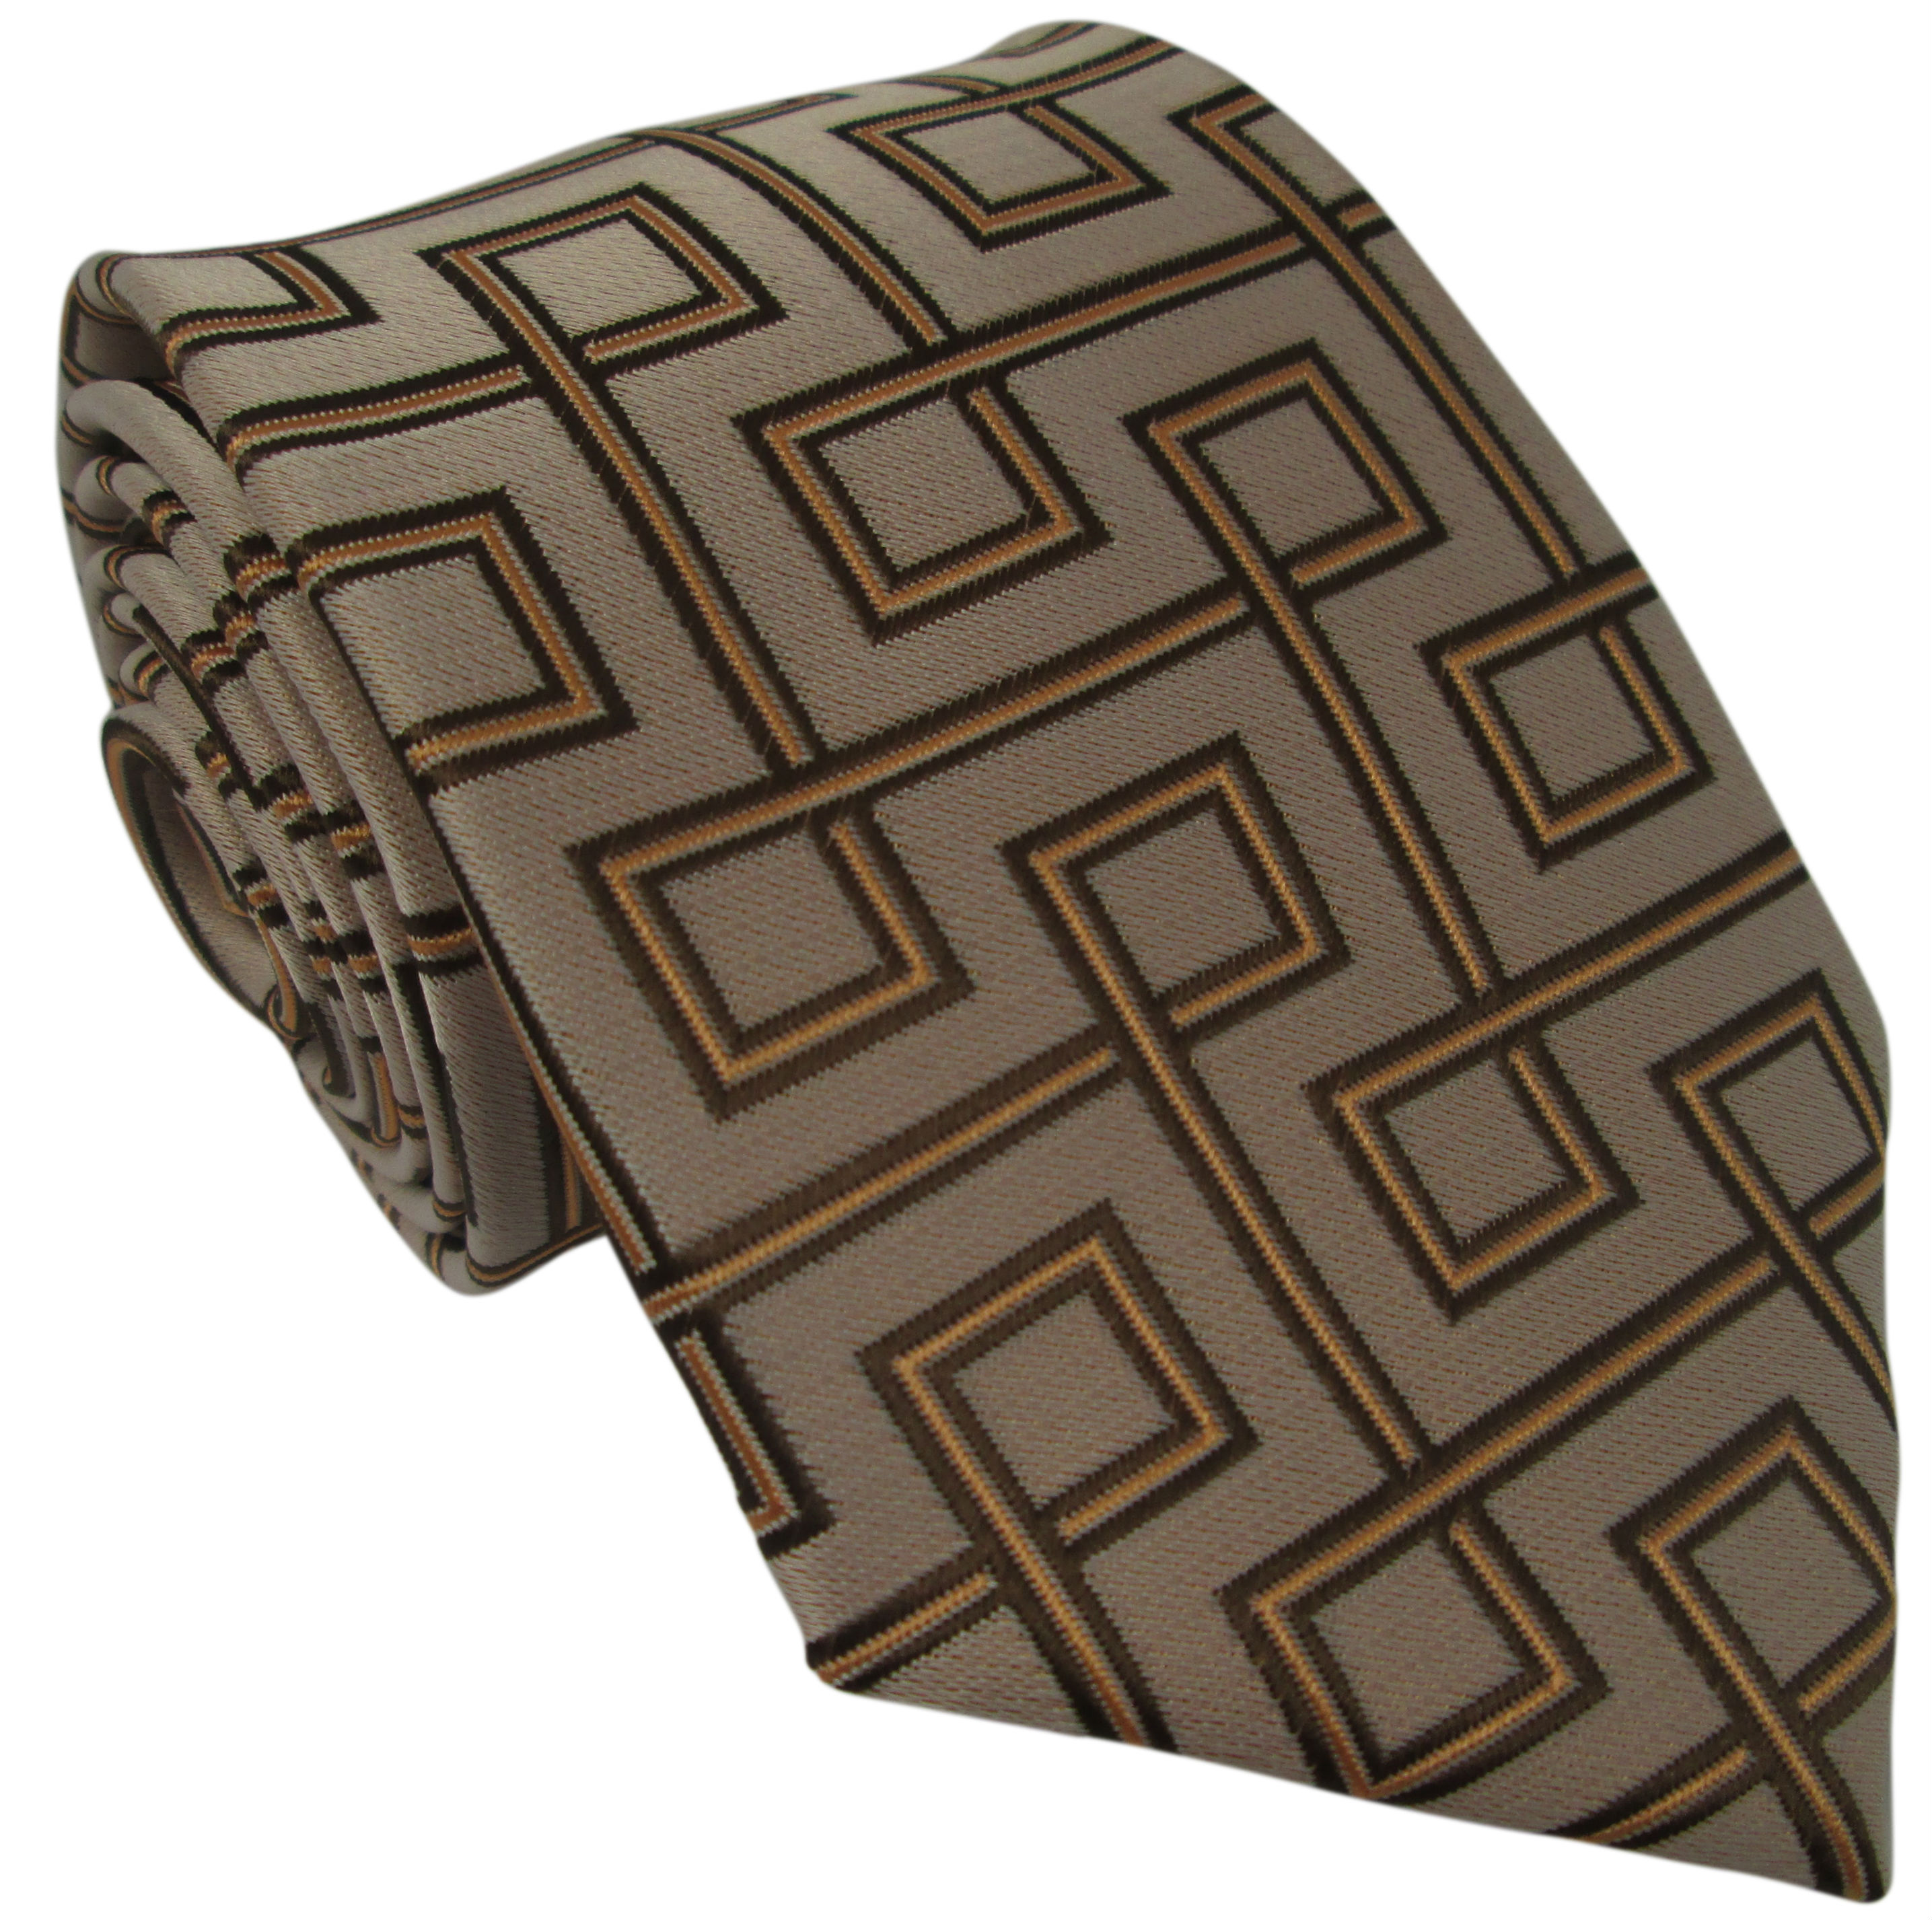 Brown Silk Tie with Retro Design